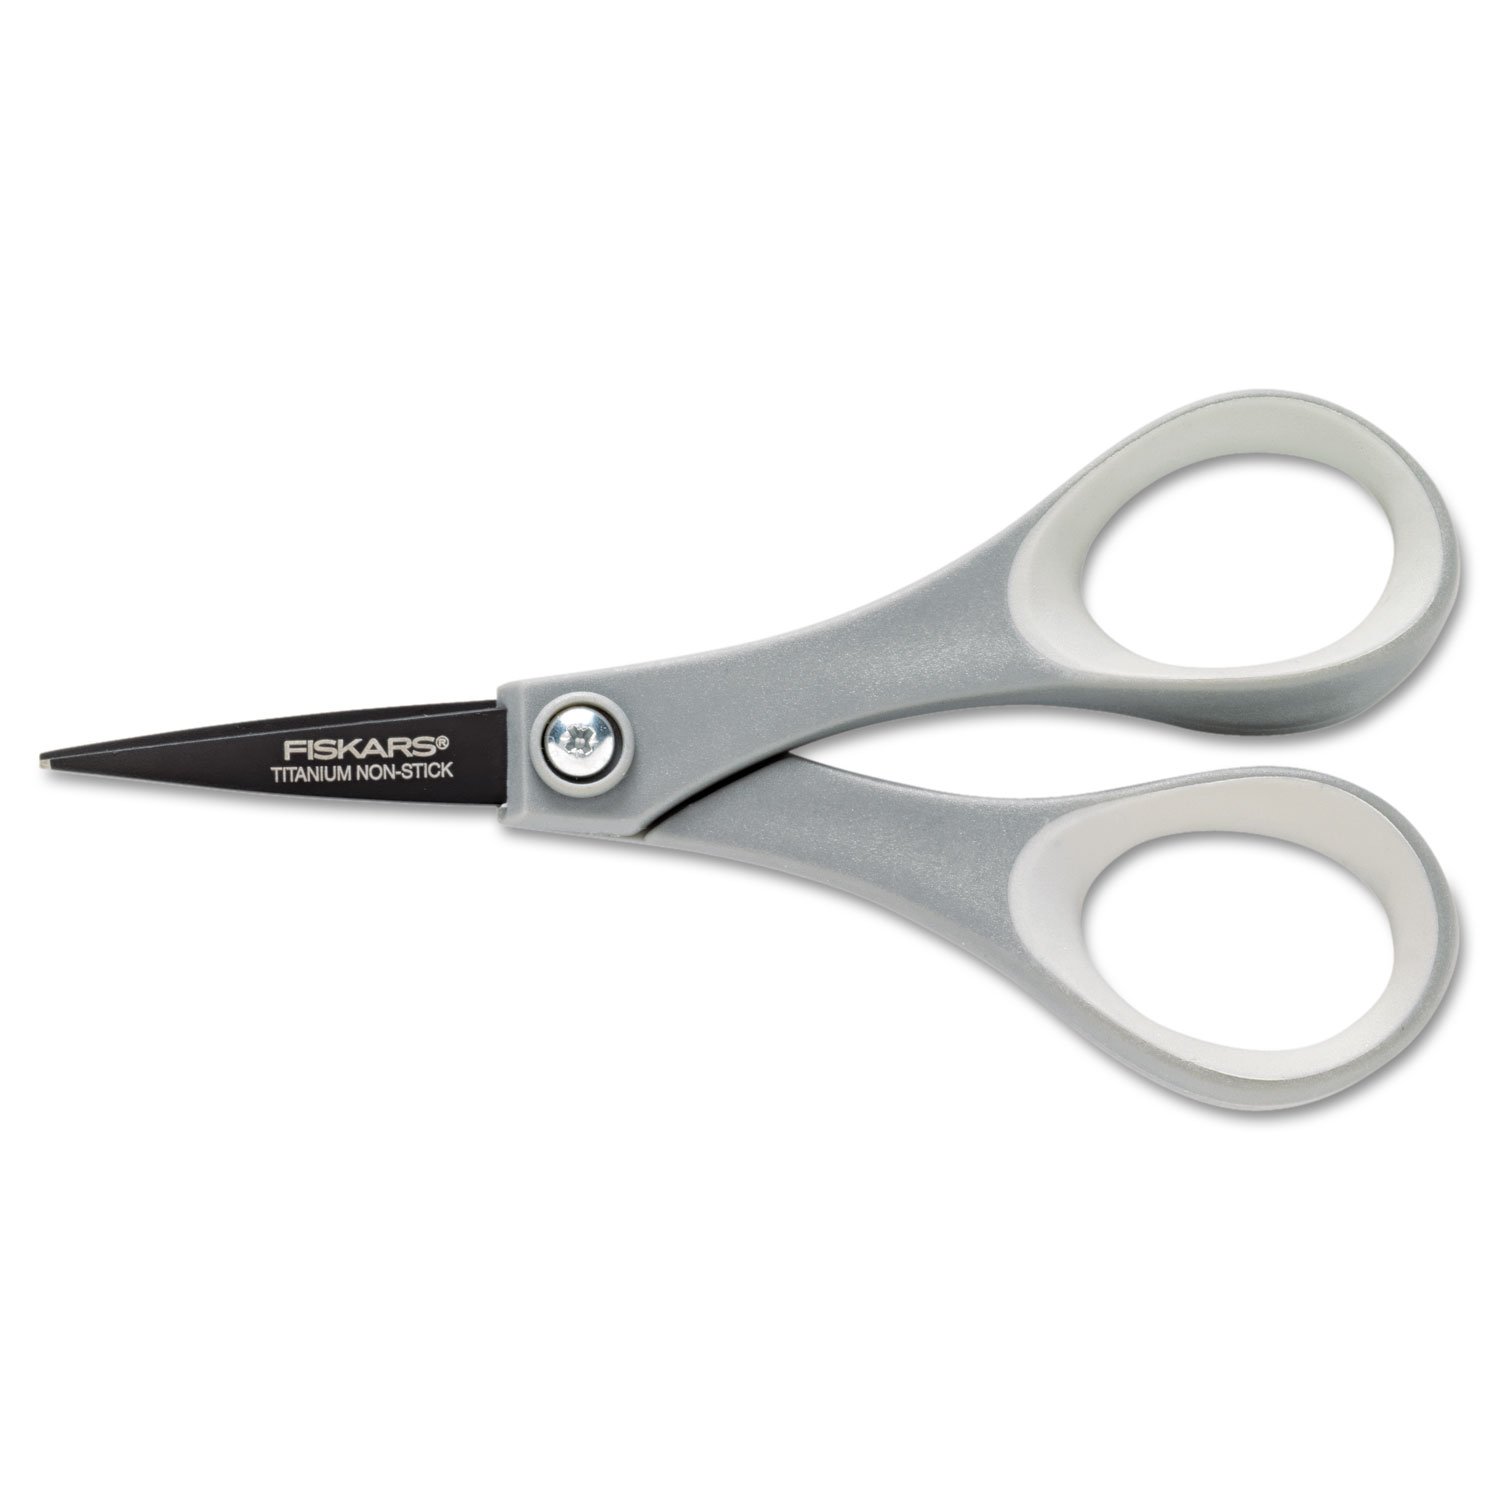  Fiskars 154110-1016 Performance Non-Stick Titanium Softgrip Scissors, Pointed Tip, 5 Long, 1.6 Cut Length, Gray Straight Handle (FSK1541101016) 